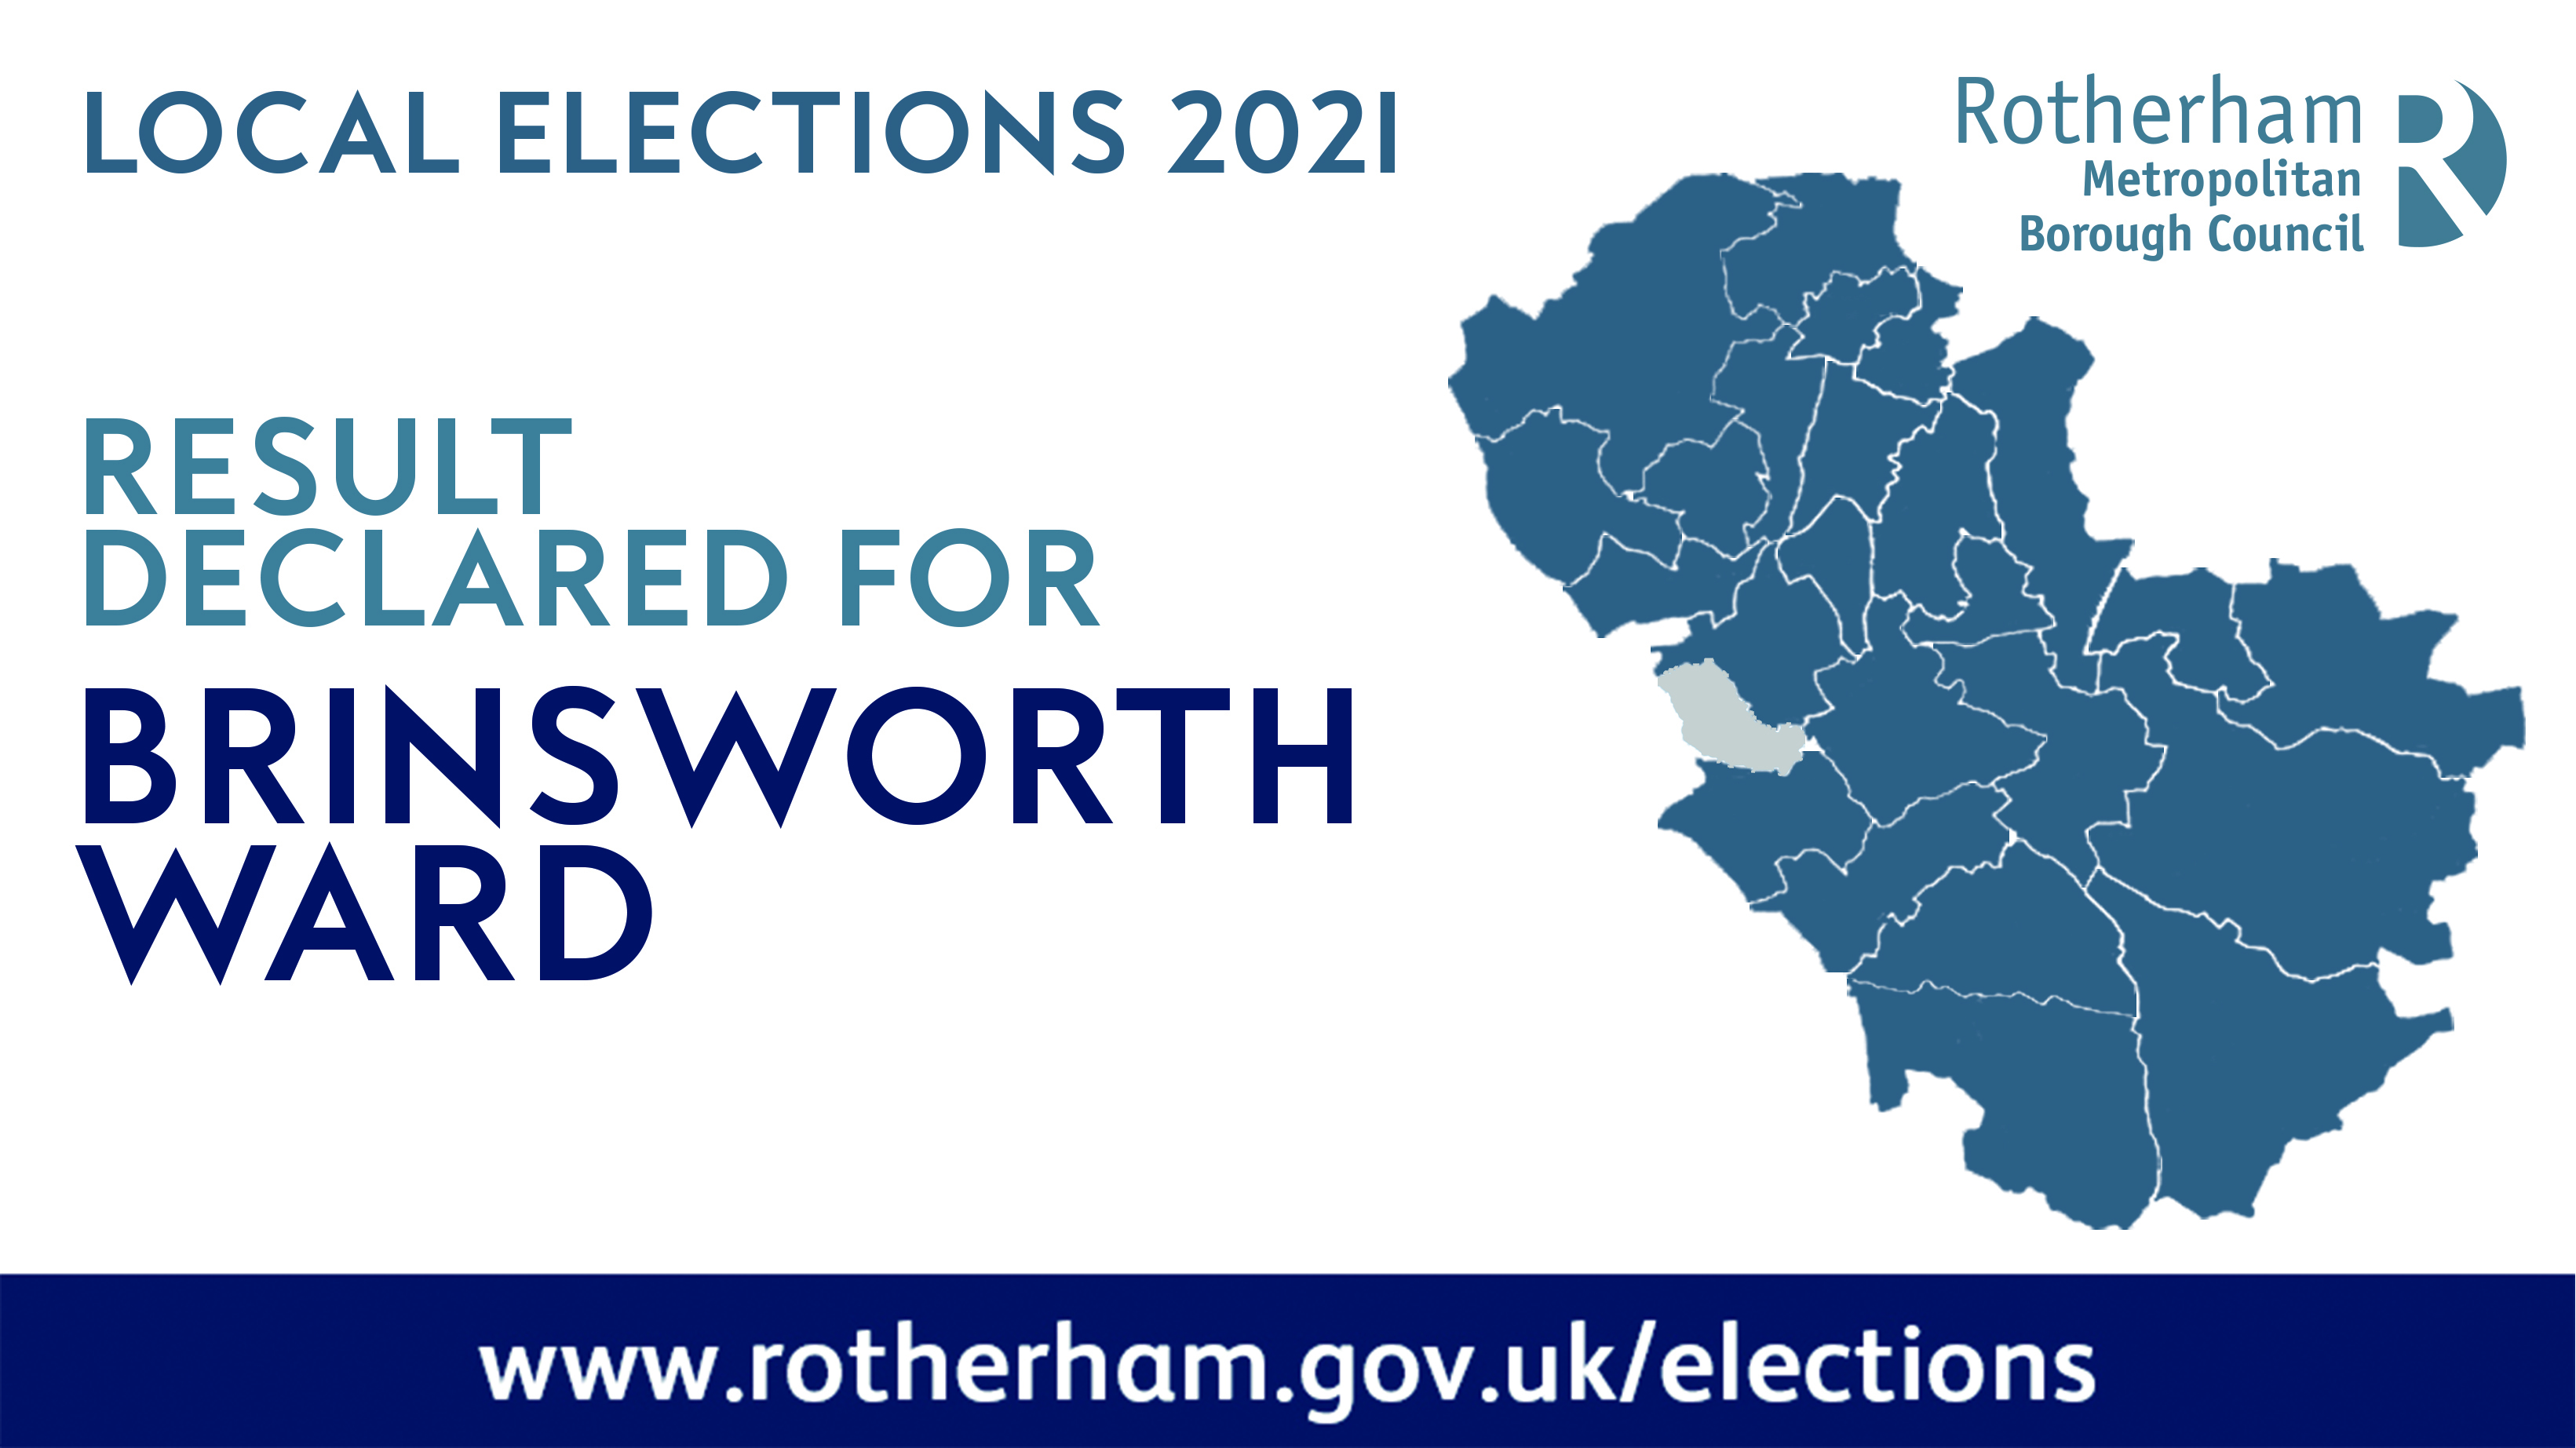 Brinsworth ward result declared